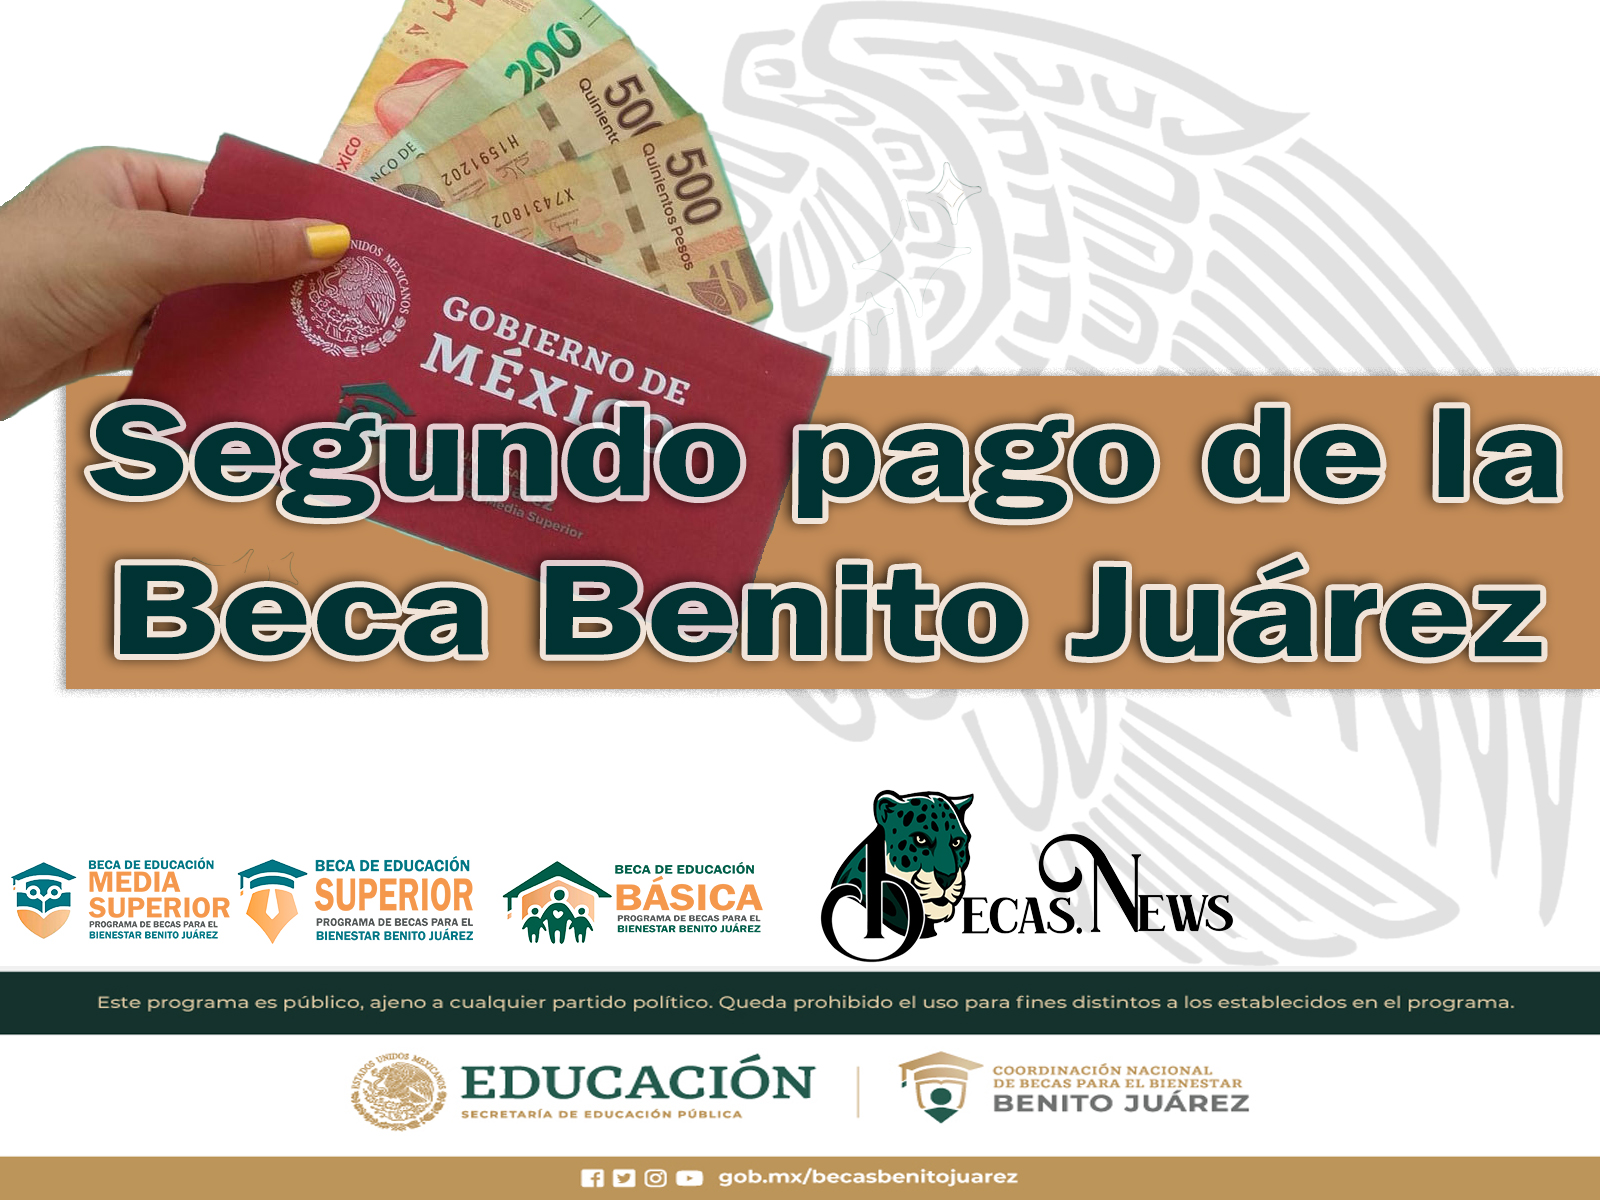 Becas Benito Juárez 2023: Segundo pago de la Beca Benito Juárez 